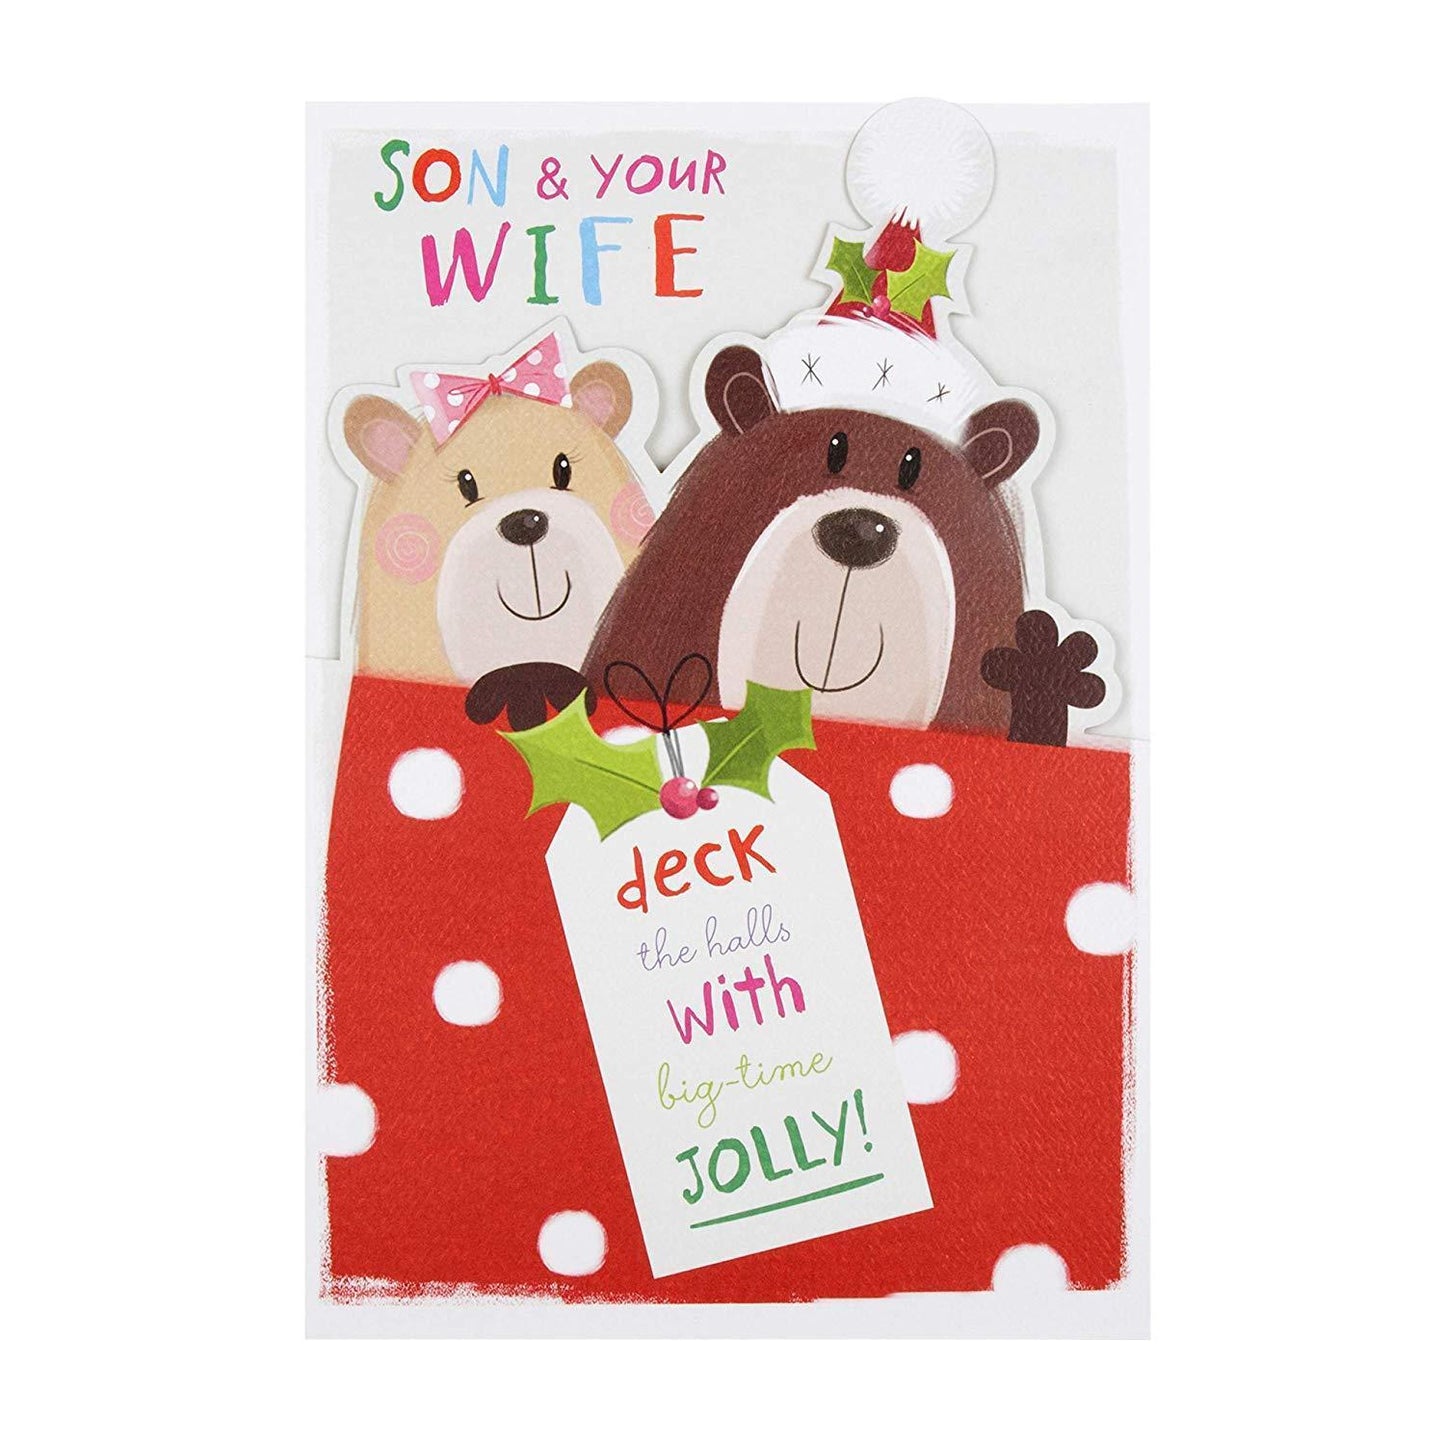 Son and Wife Christmas Card 'Festive Fun'